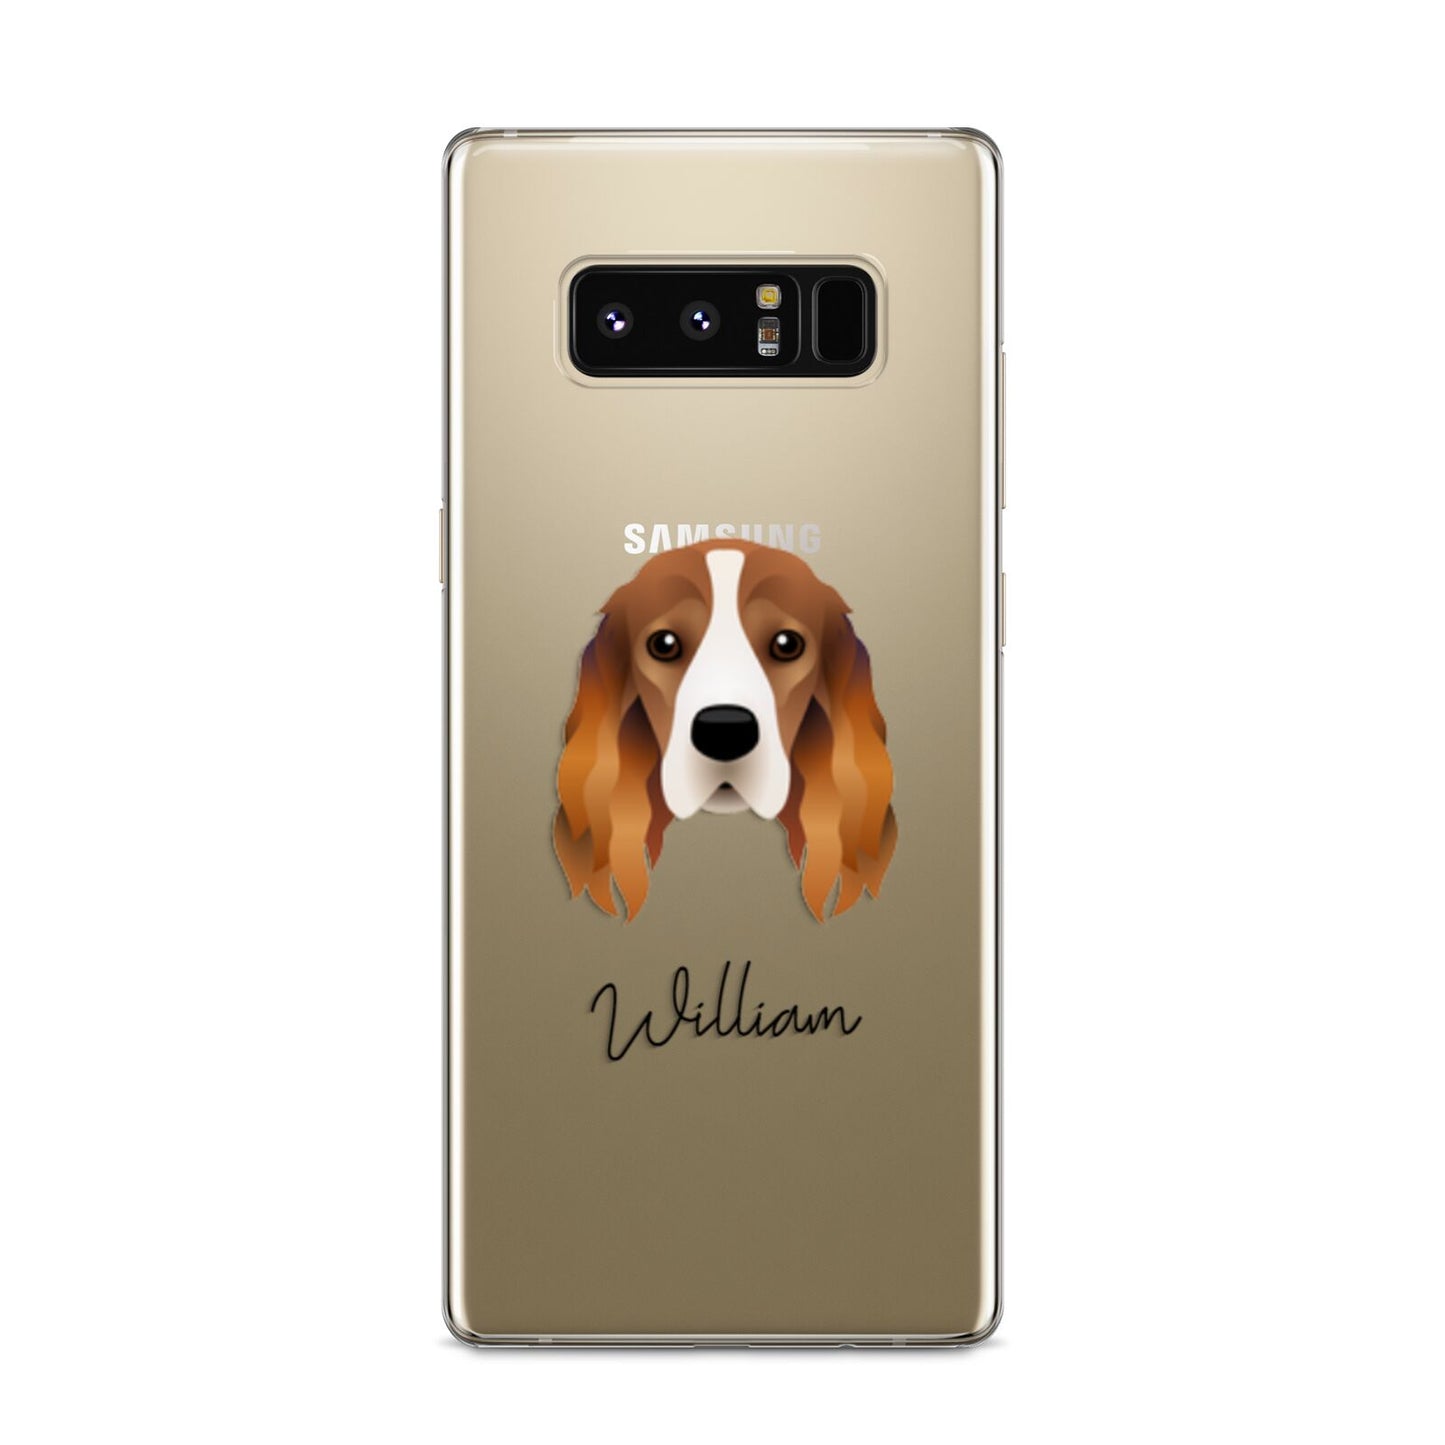 Cocker Spaniel Personalised Samsung Galaxy S8 Case